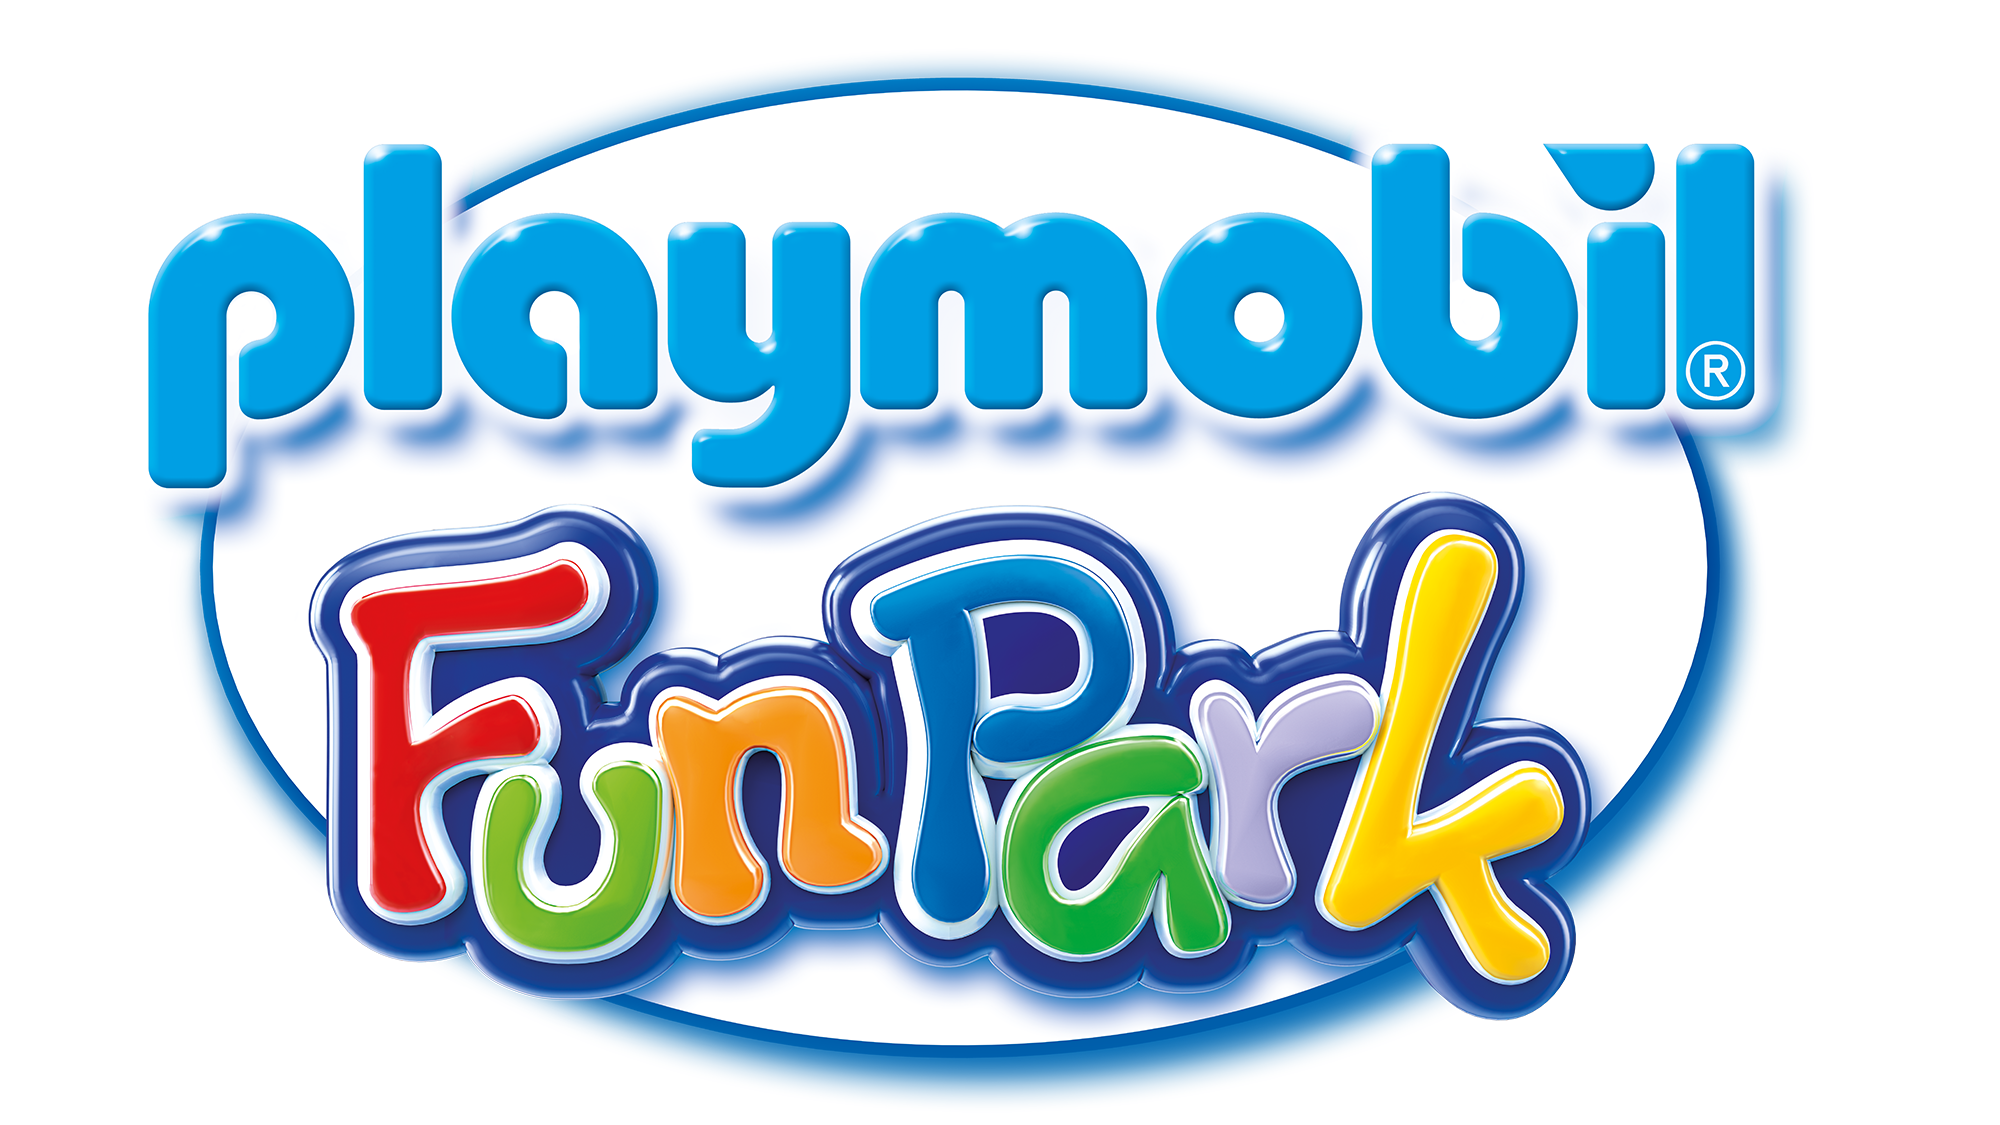 Playmobil FunPark